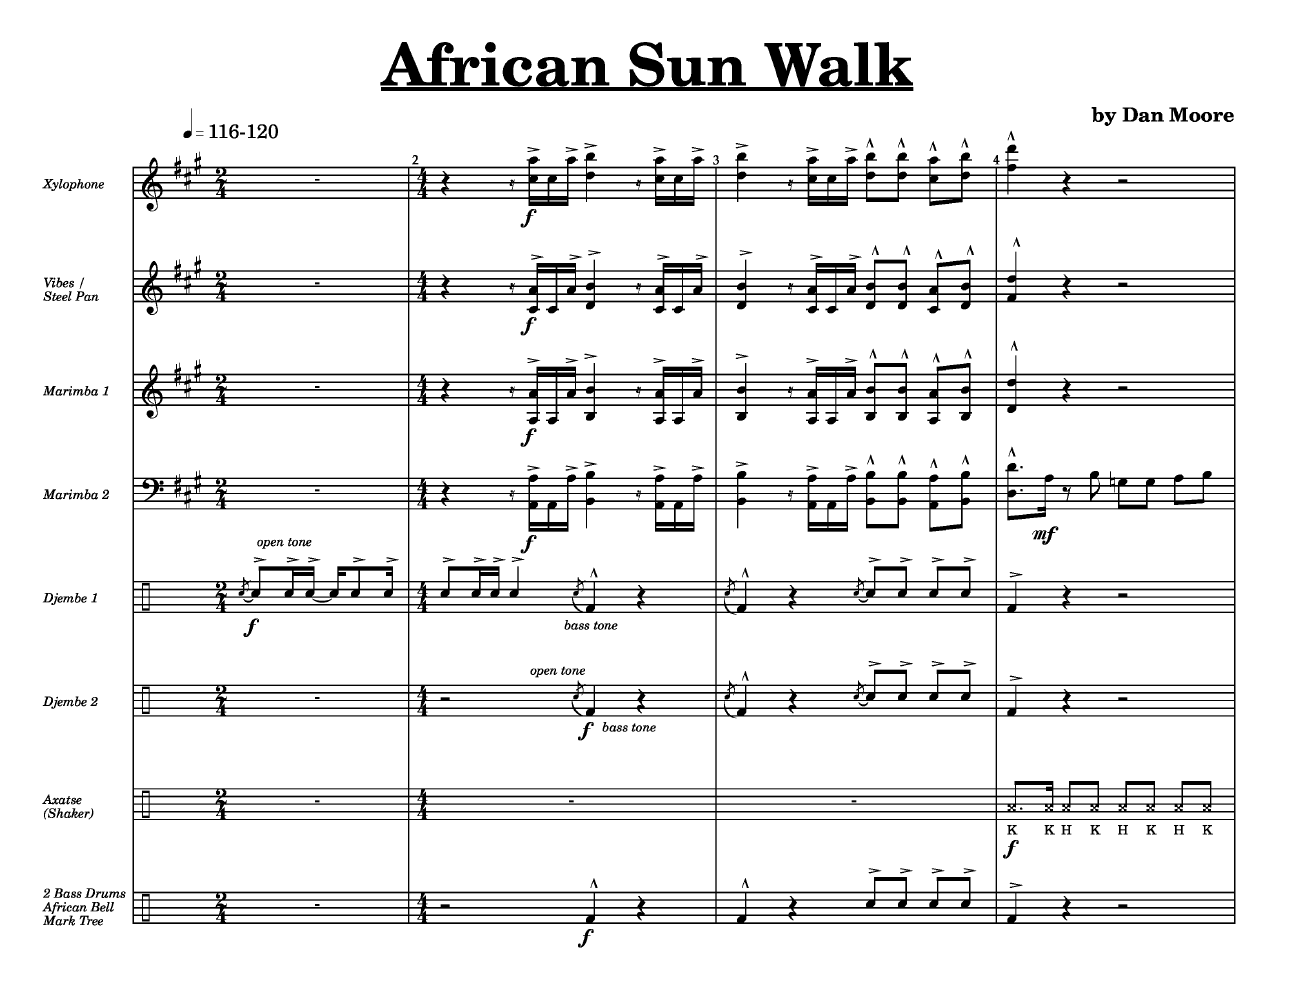 African Sun Walk Percussion Ensemble